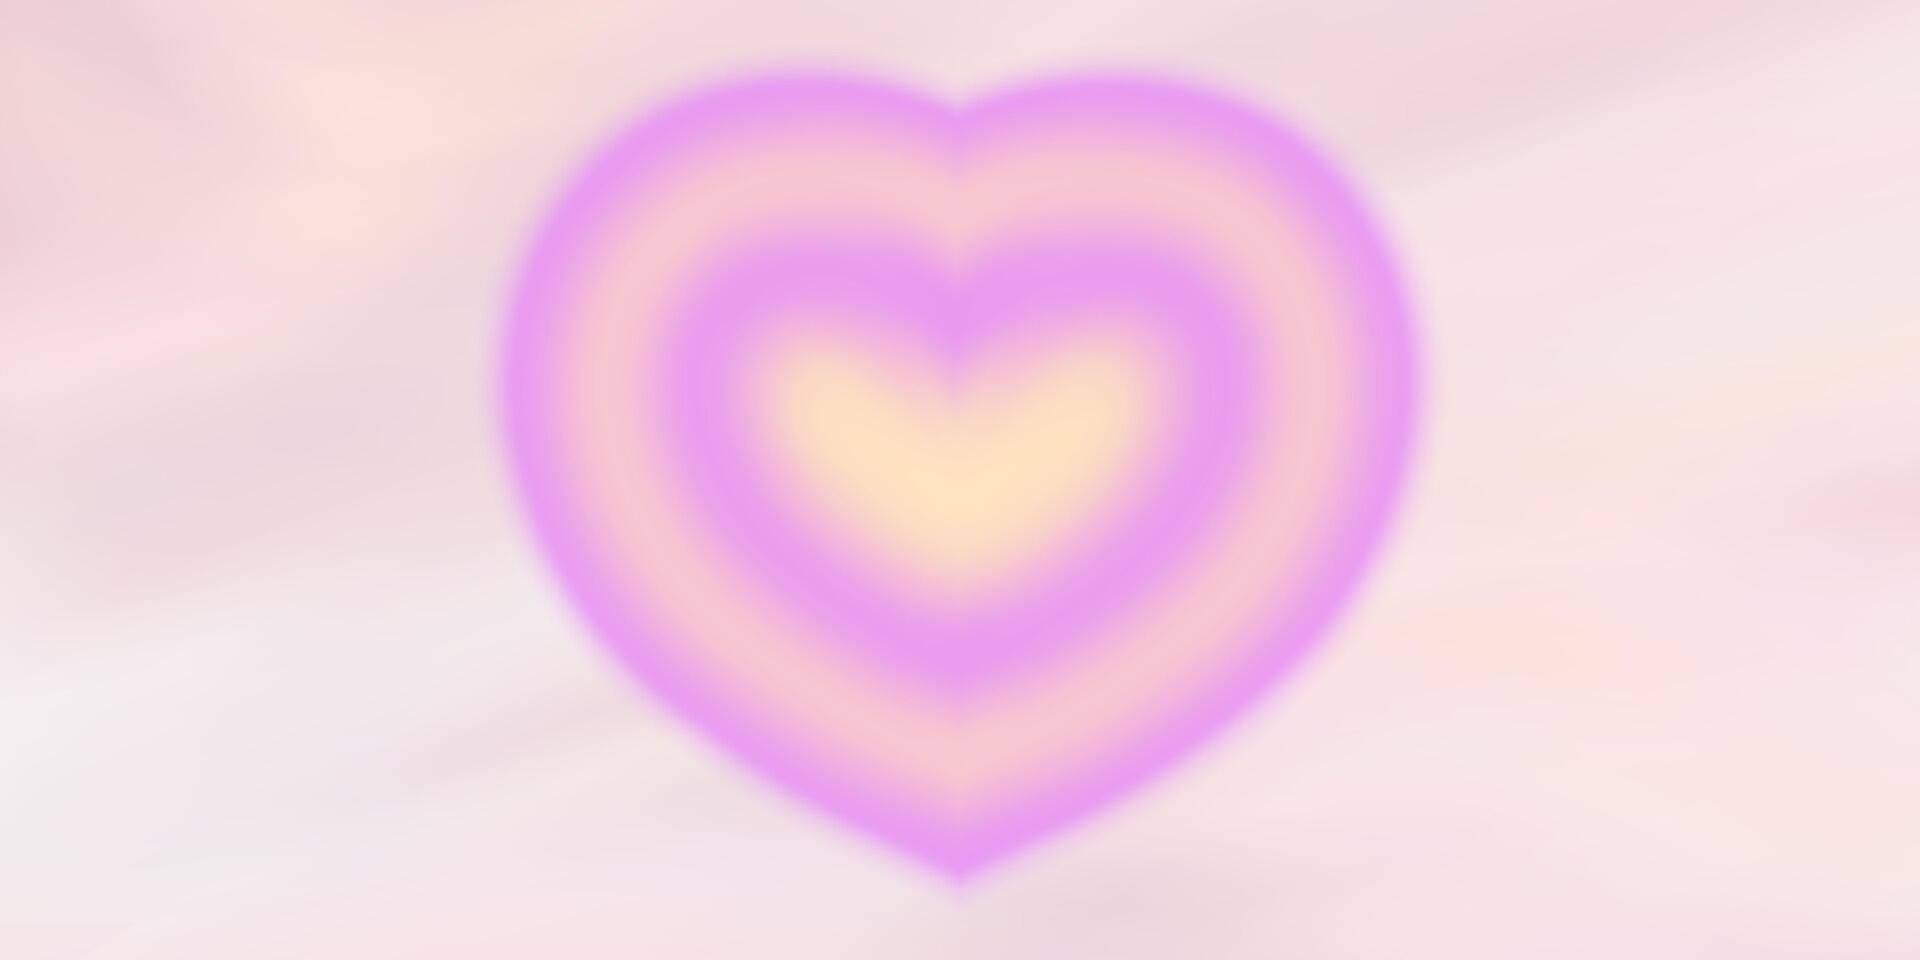 Blur Heart background tunnel gradient y2k. Aesthetic gradient with heart shape for background valentines day. Vector illustration